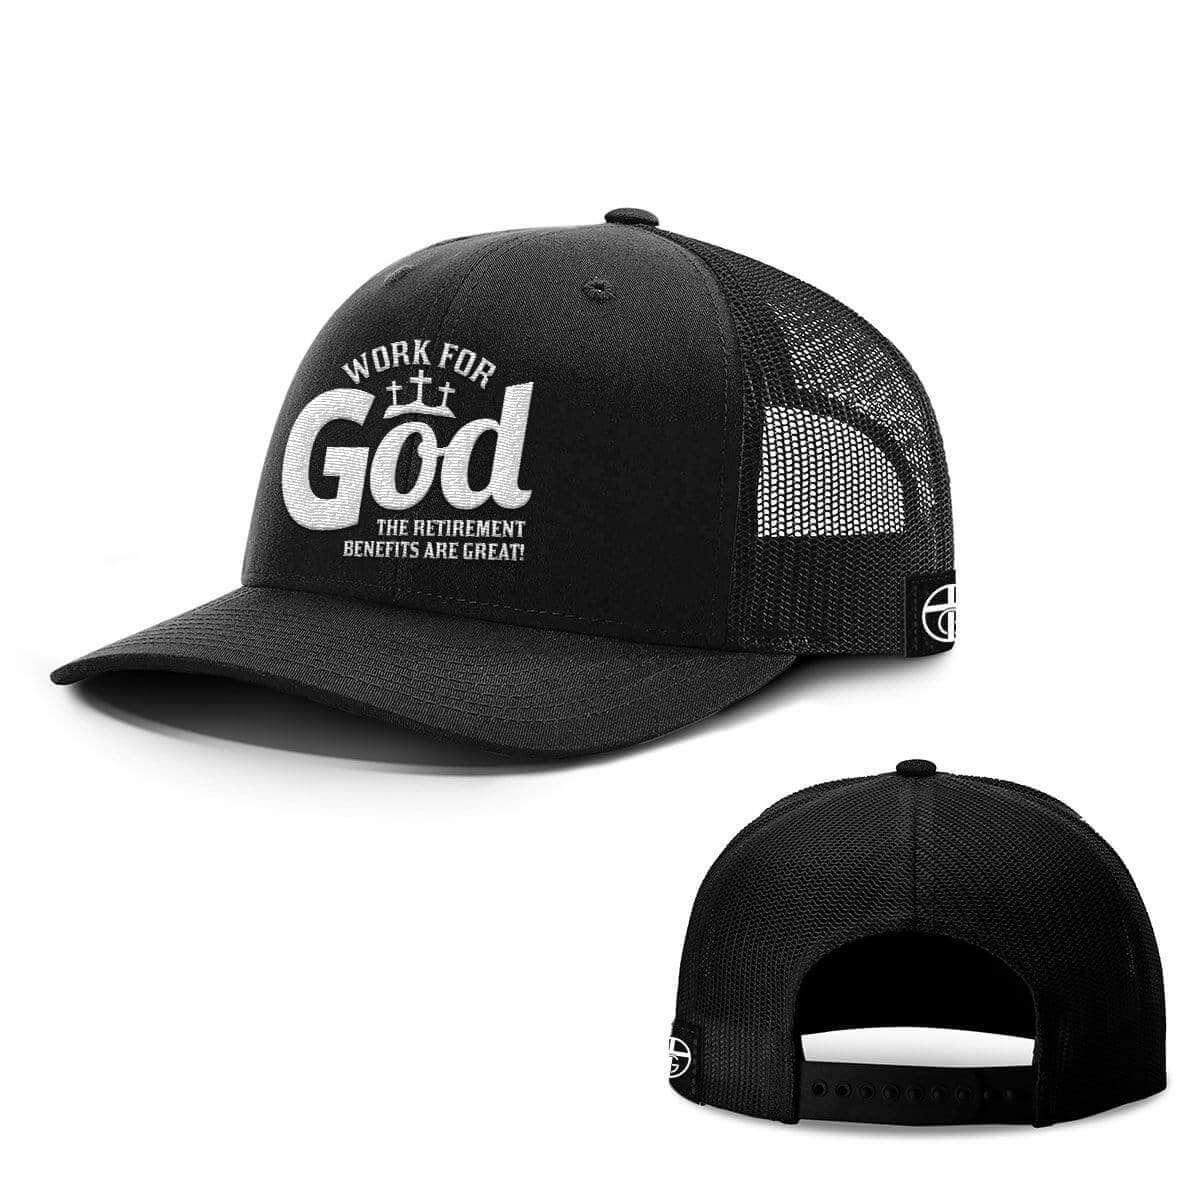 Work For God Hats - Our True God